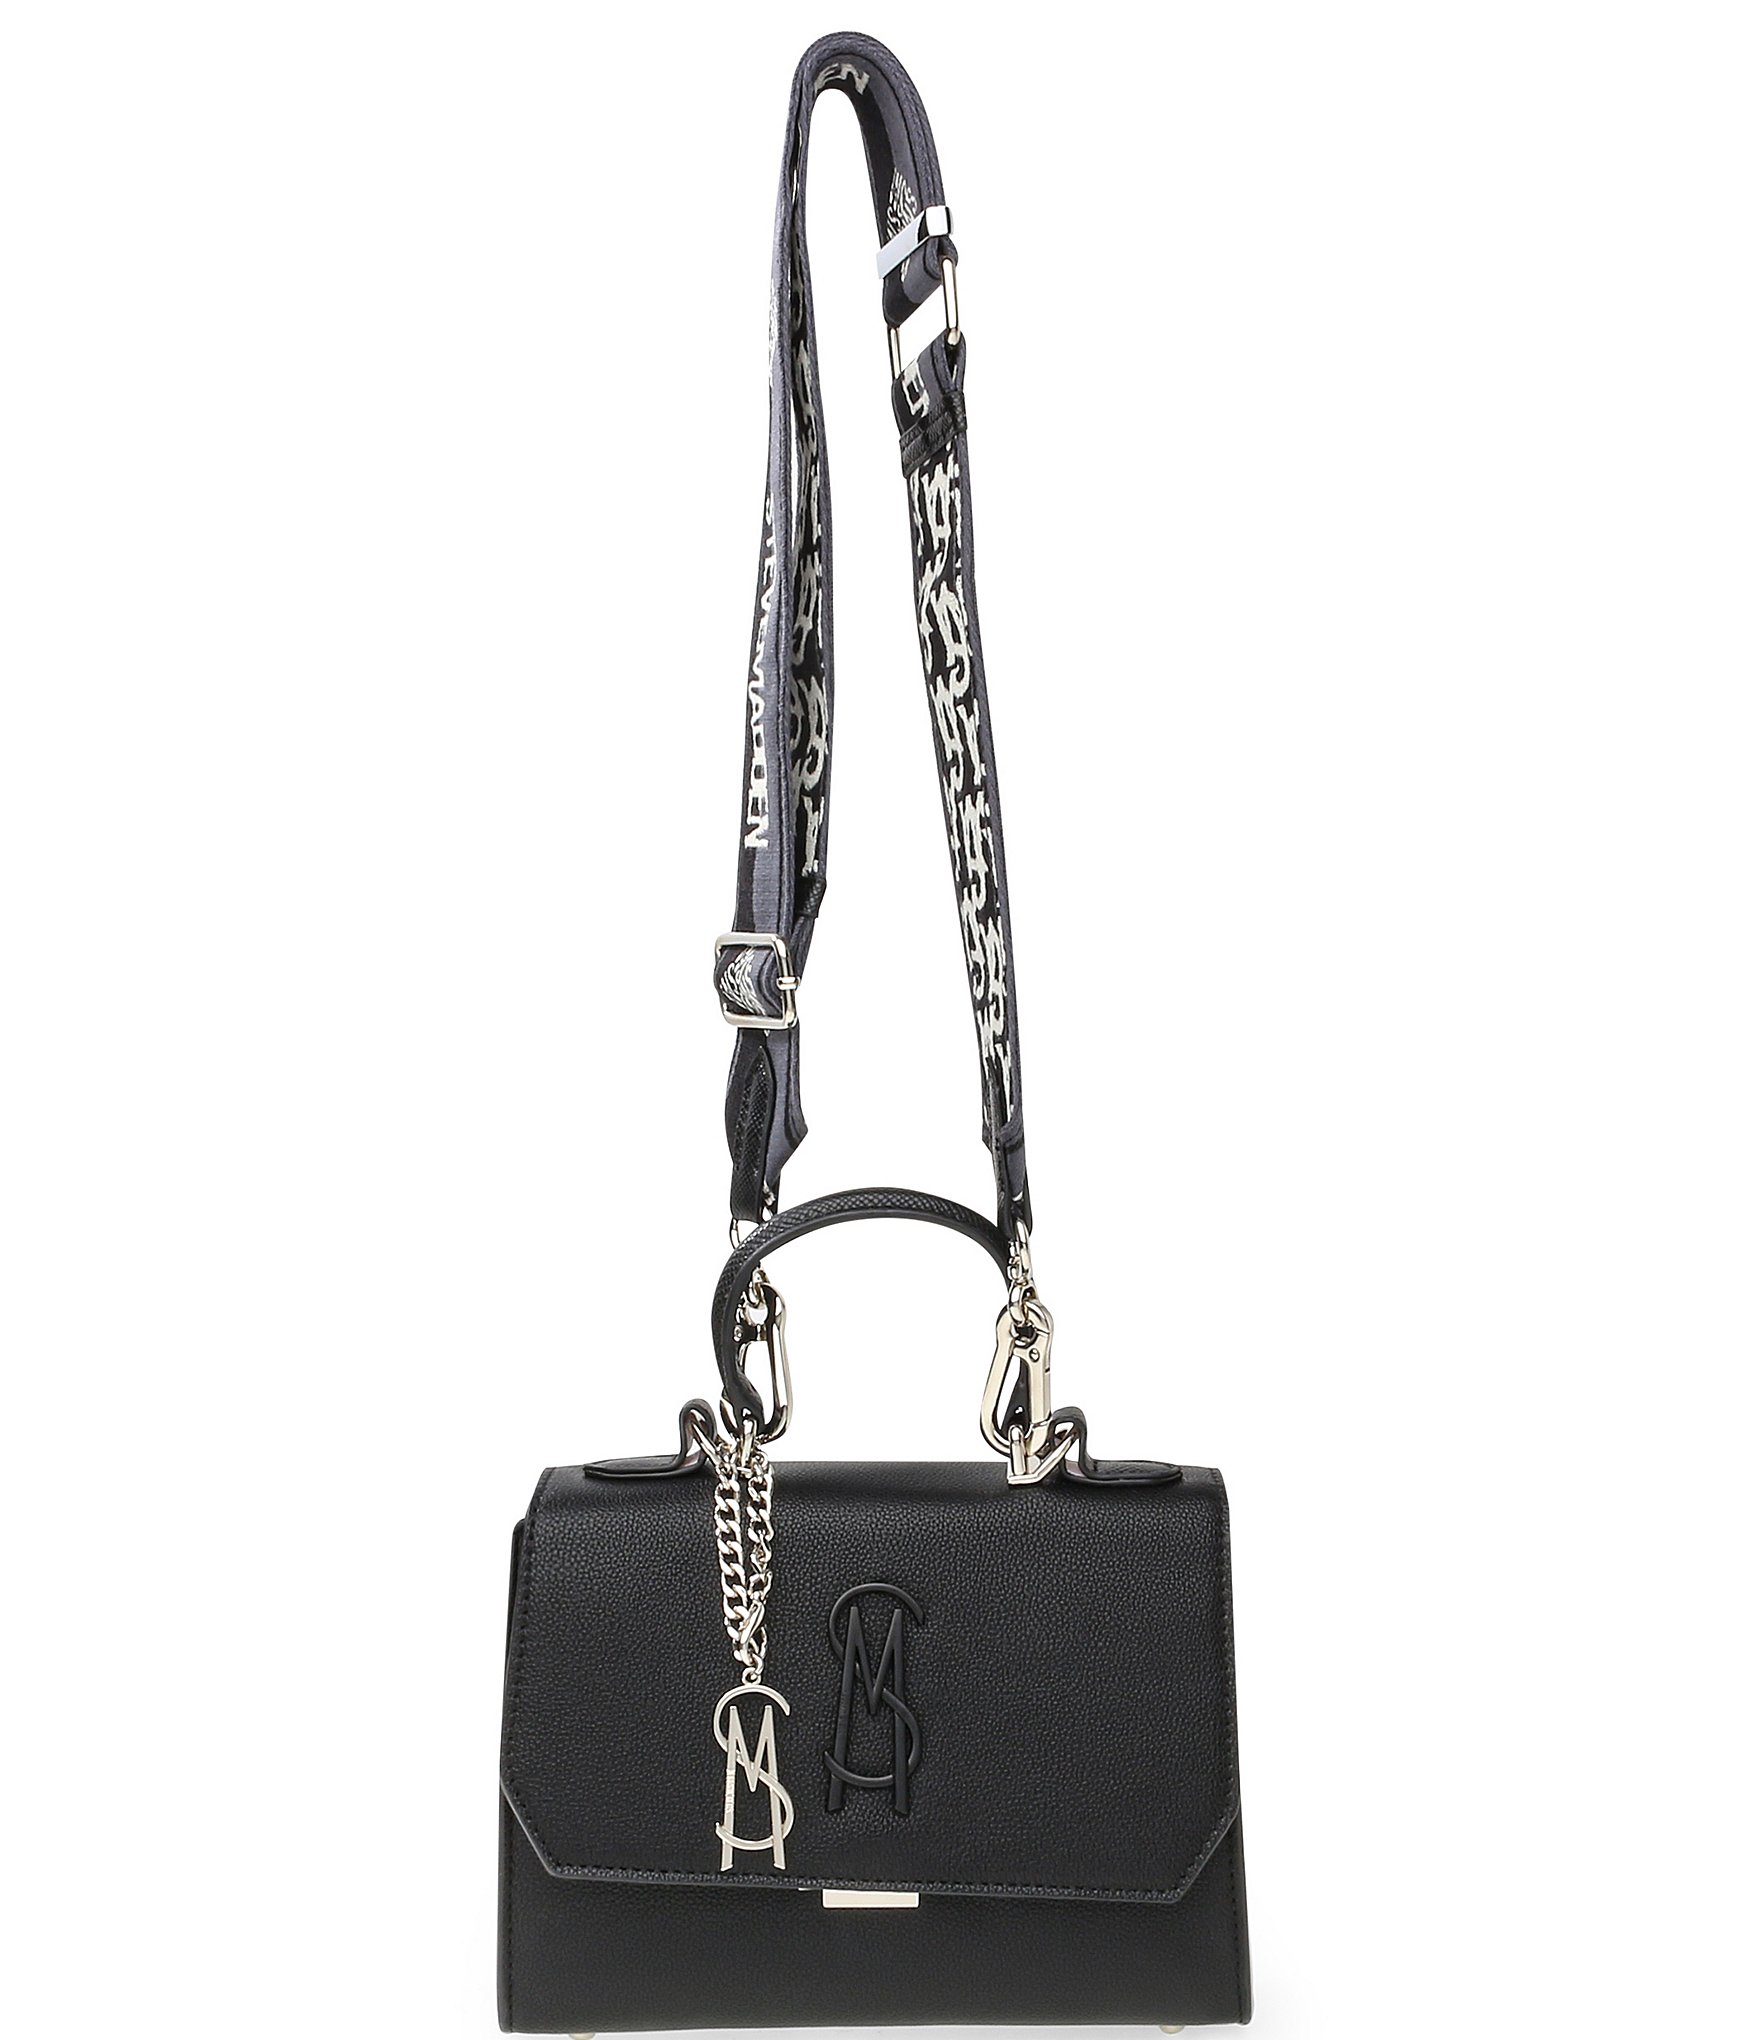 DIEGO Bag Black/Tan Handbag With Crossbody Strap | Women's Handbags – Steve  Madden